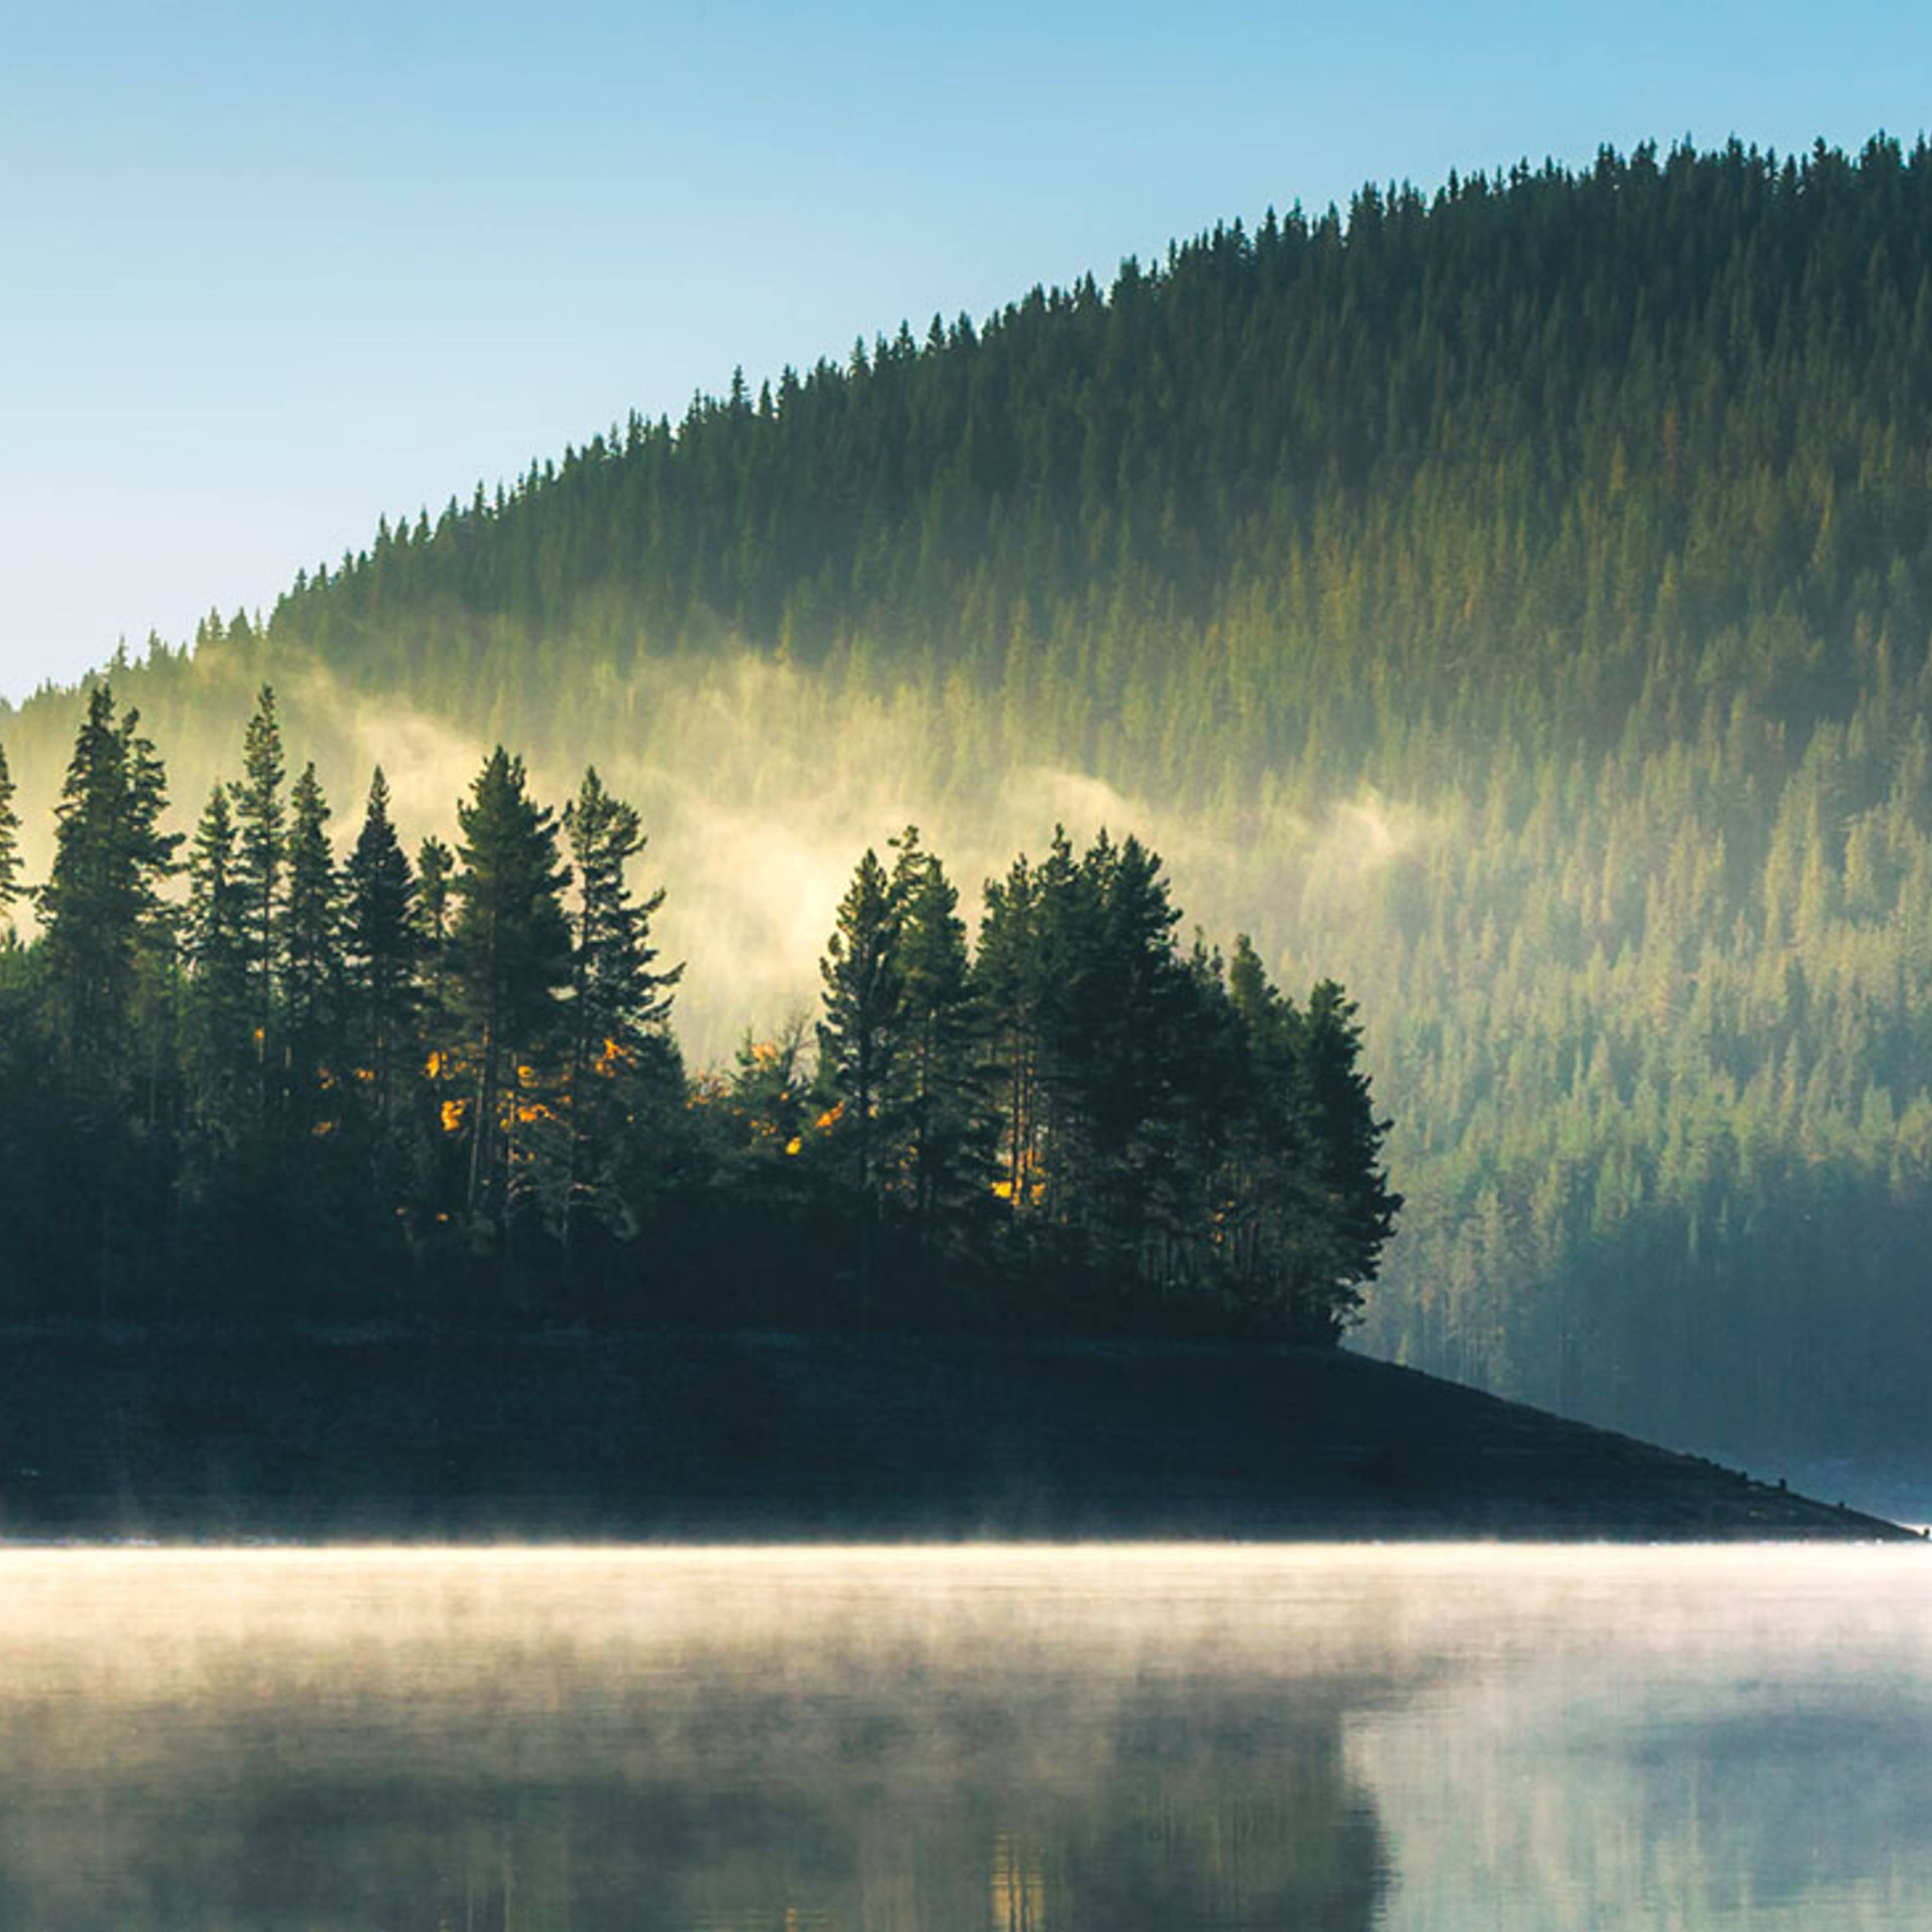 Beautiful Lake and mountains, morning shot